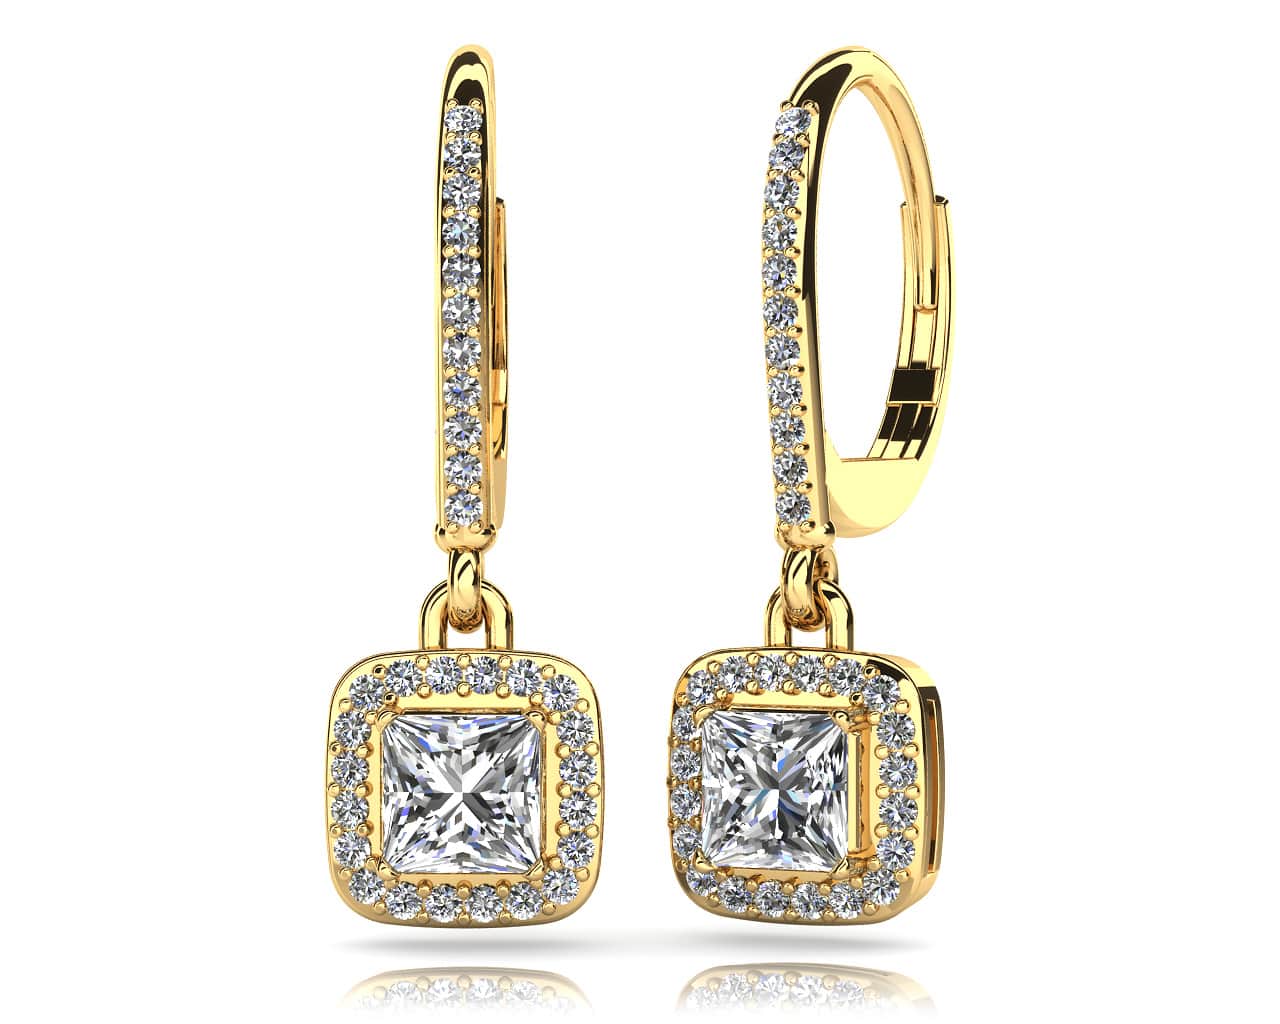 Princess Cut Diamond Allure Earrings In Gold Or Platinum